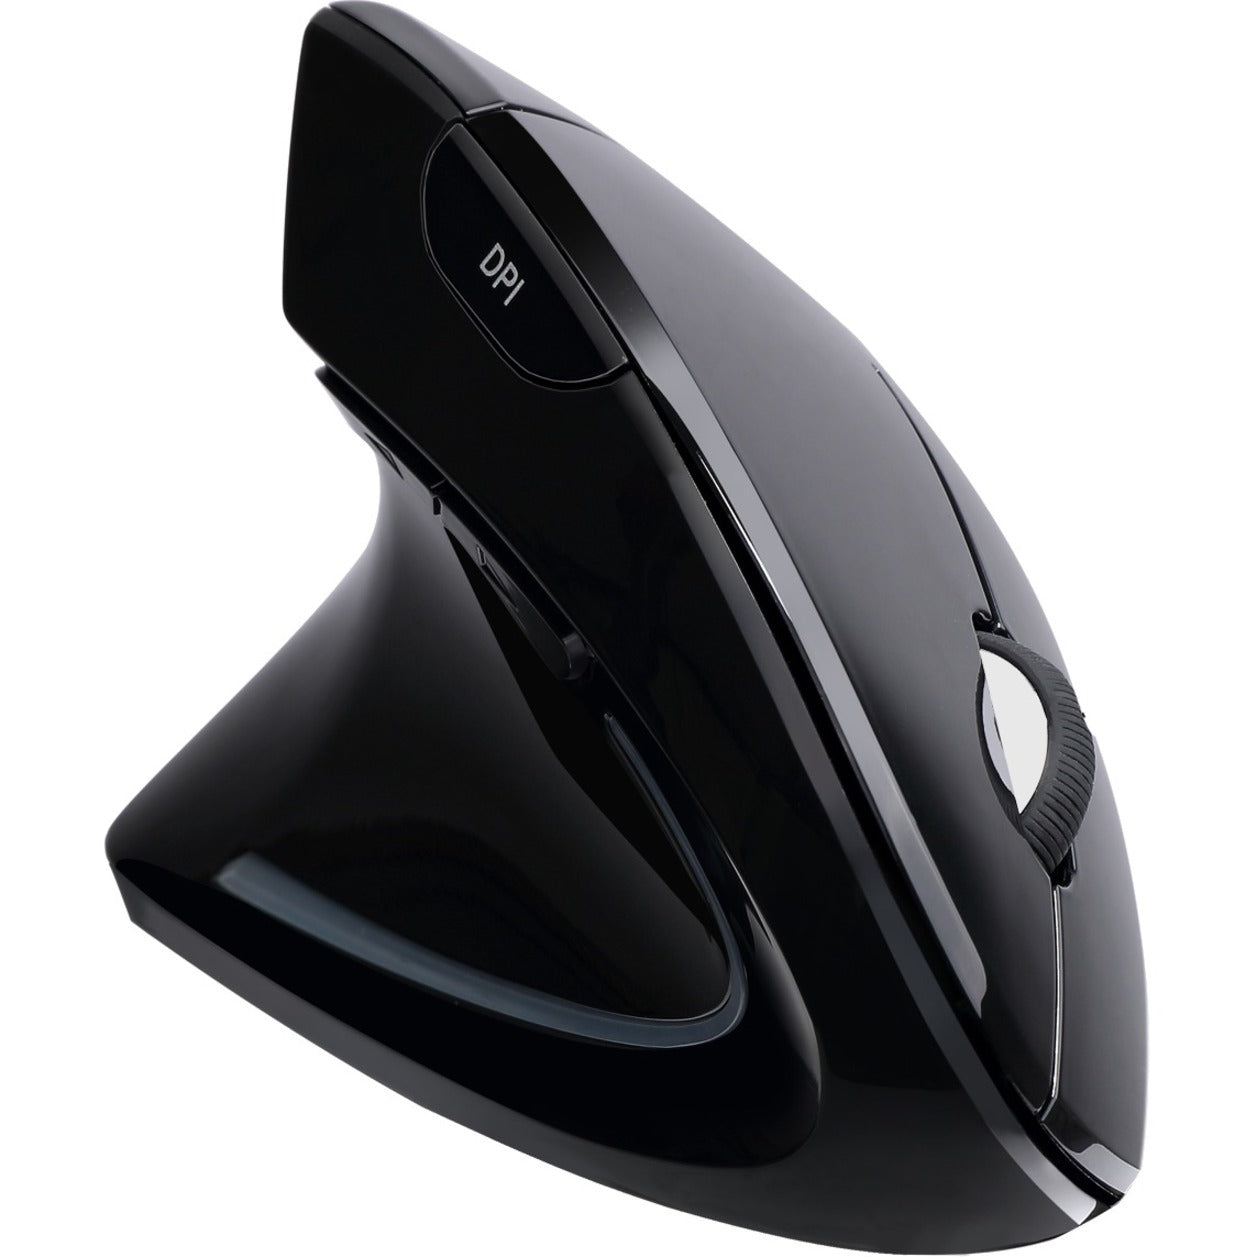 Adesso IMOUSE E90 Wireless Left-Handed Vertical Ergonomic Mouse, 2.4GHz RF, 1600 DPI, Black